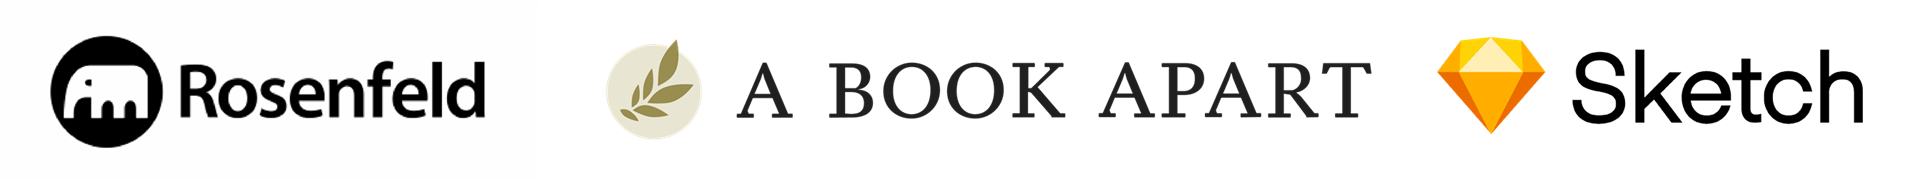 Rosenfeld, A Book Apart and Sketch logos